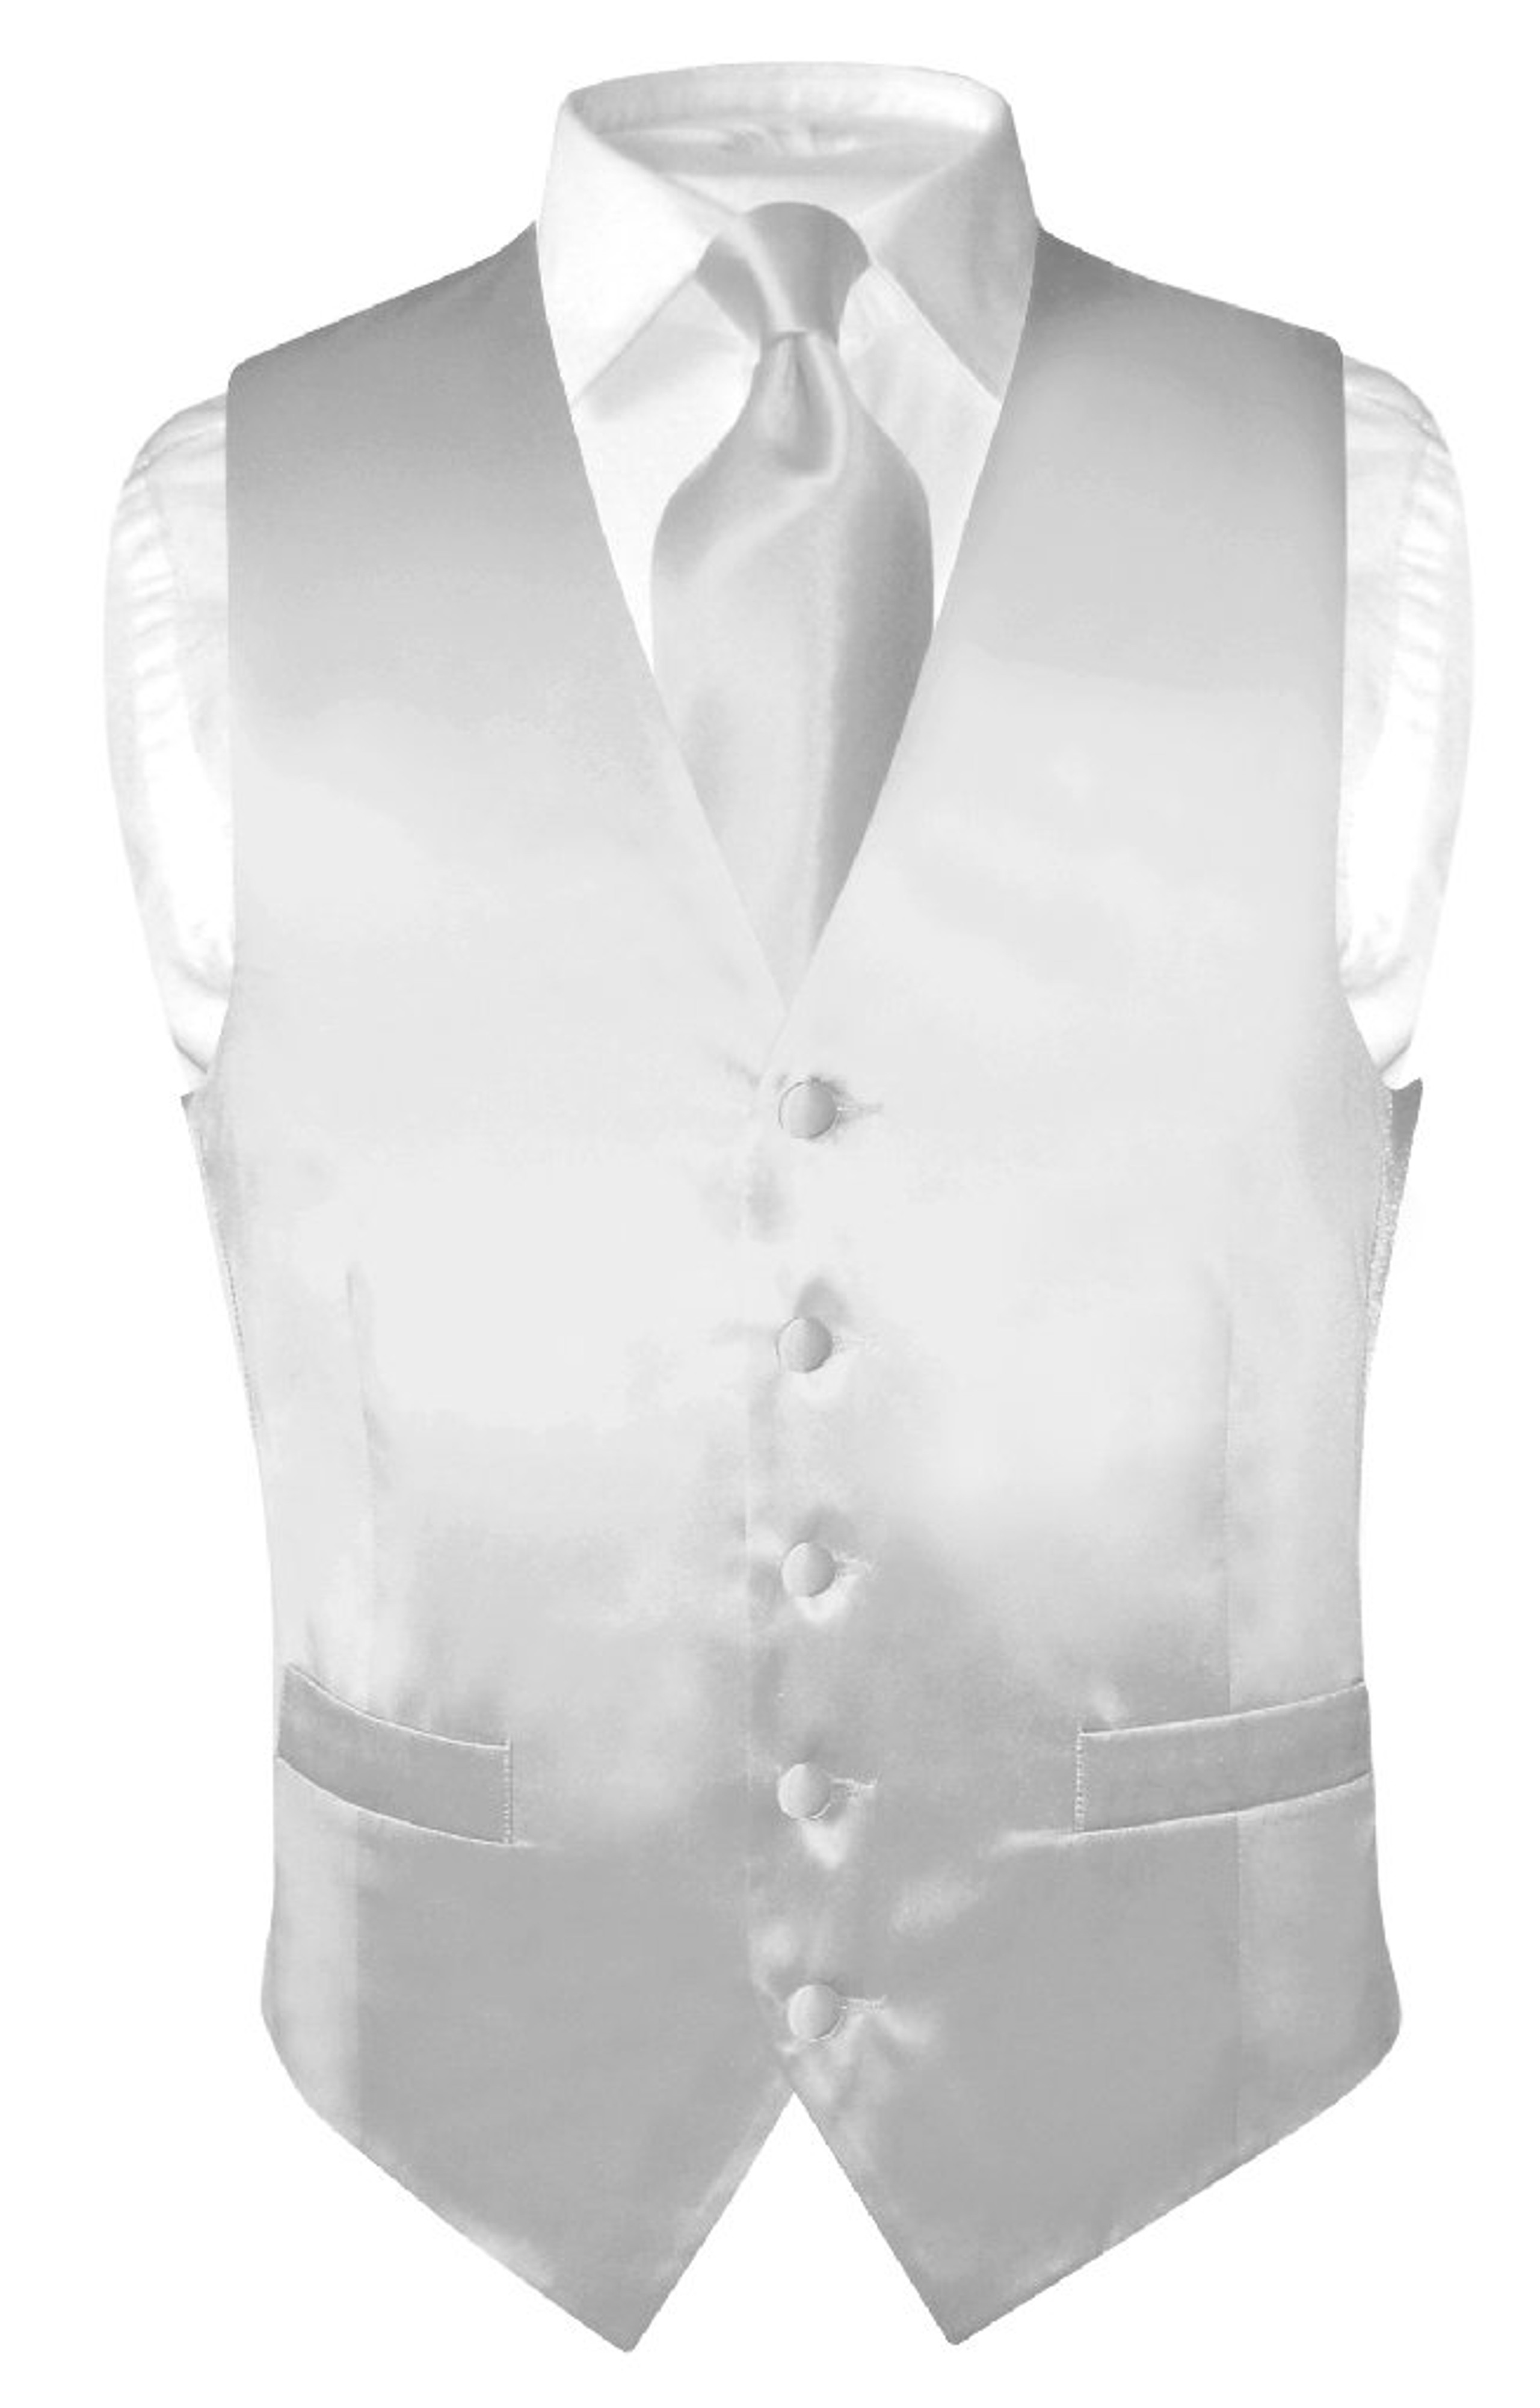 Charcoal Grey Vest and NeckTie | Silk Solid Color Vest Neck Tie Set